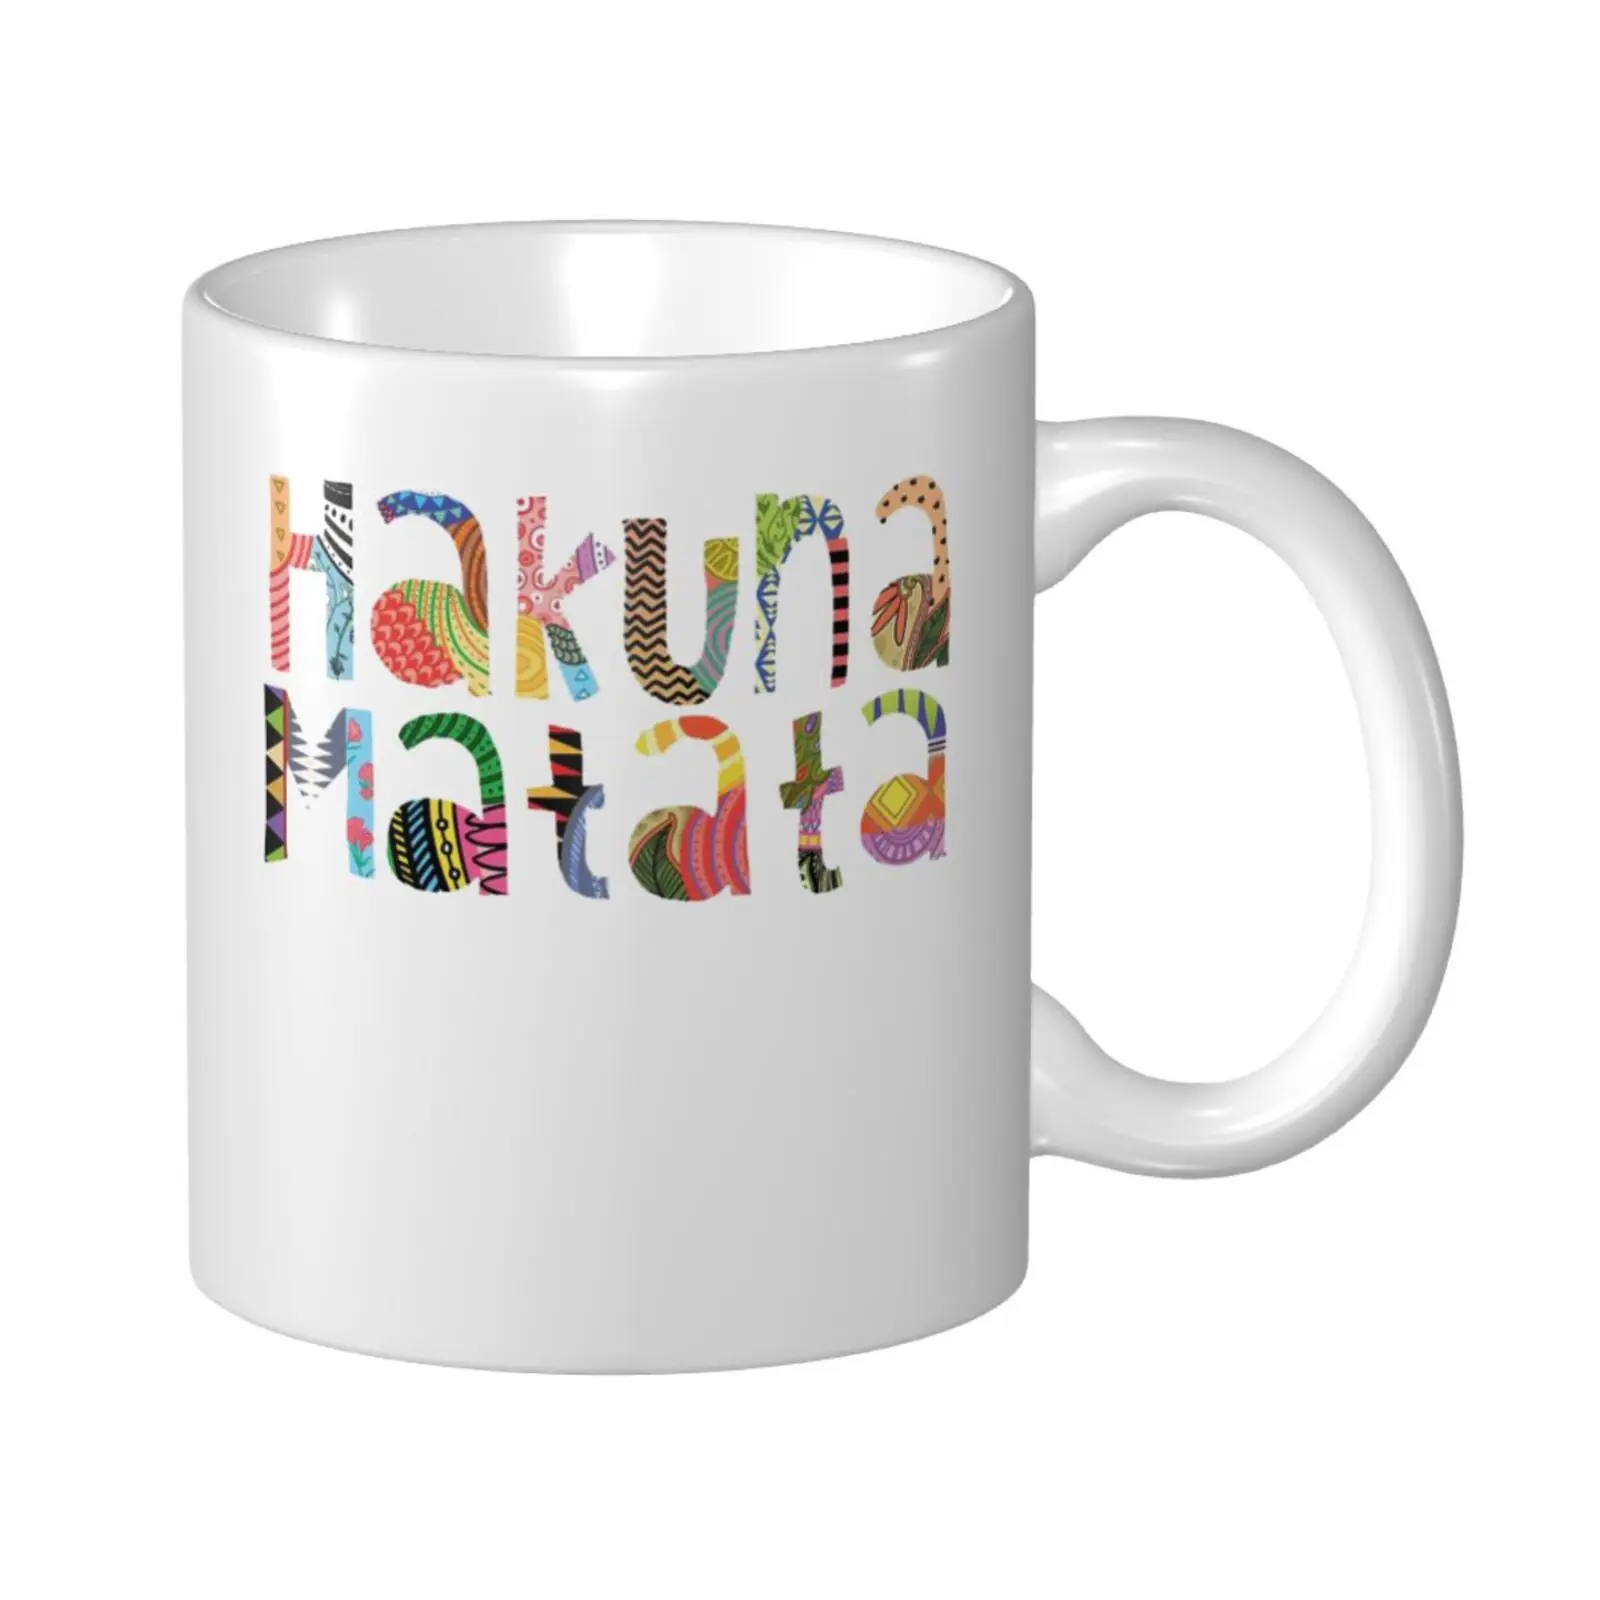 Buy Hakuna matata 11 Anime Mug Arab Coffee Cups Ceramic Tableware Personalized Gifts on